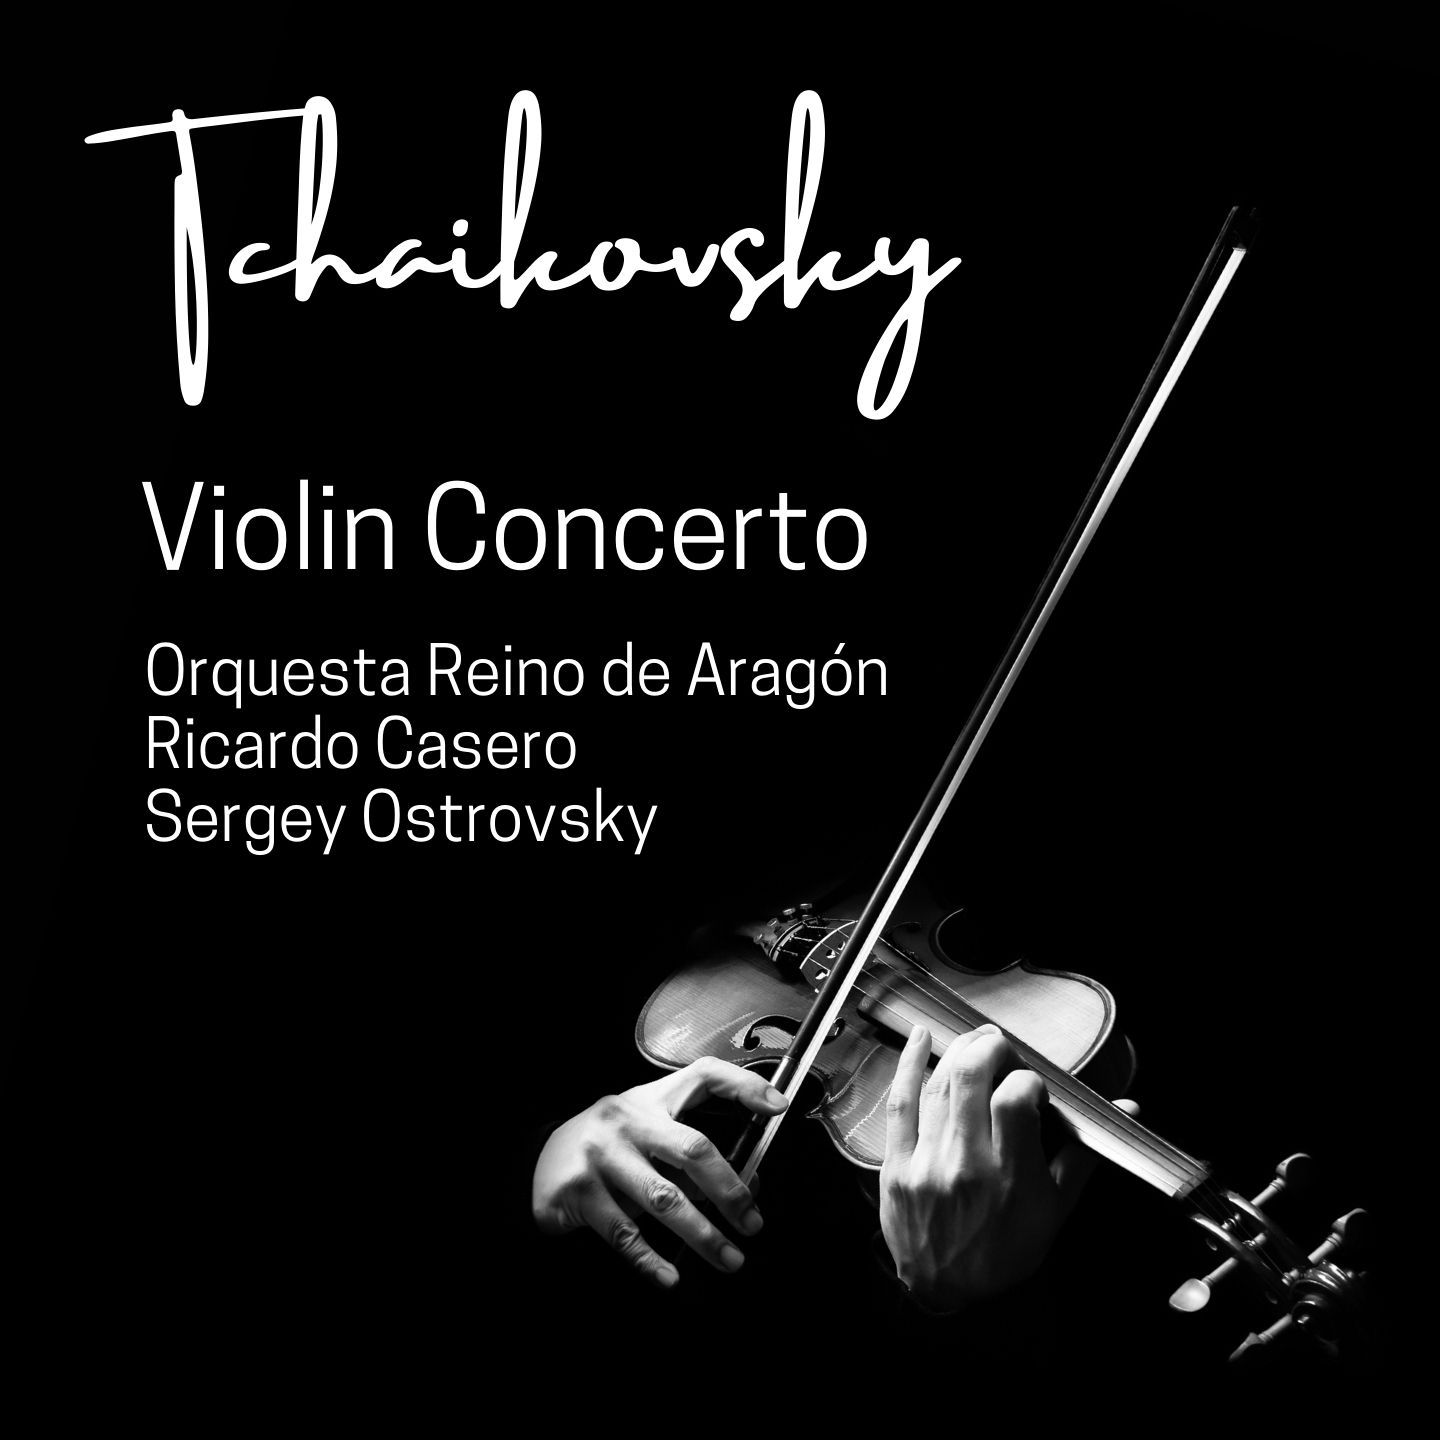 Tchaikovsky: Violin Concerto, Op. 35